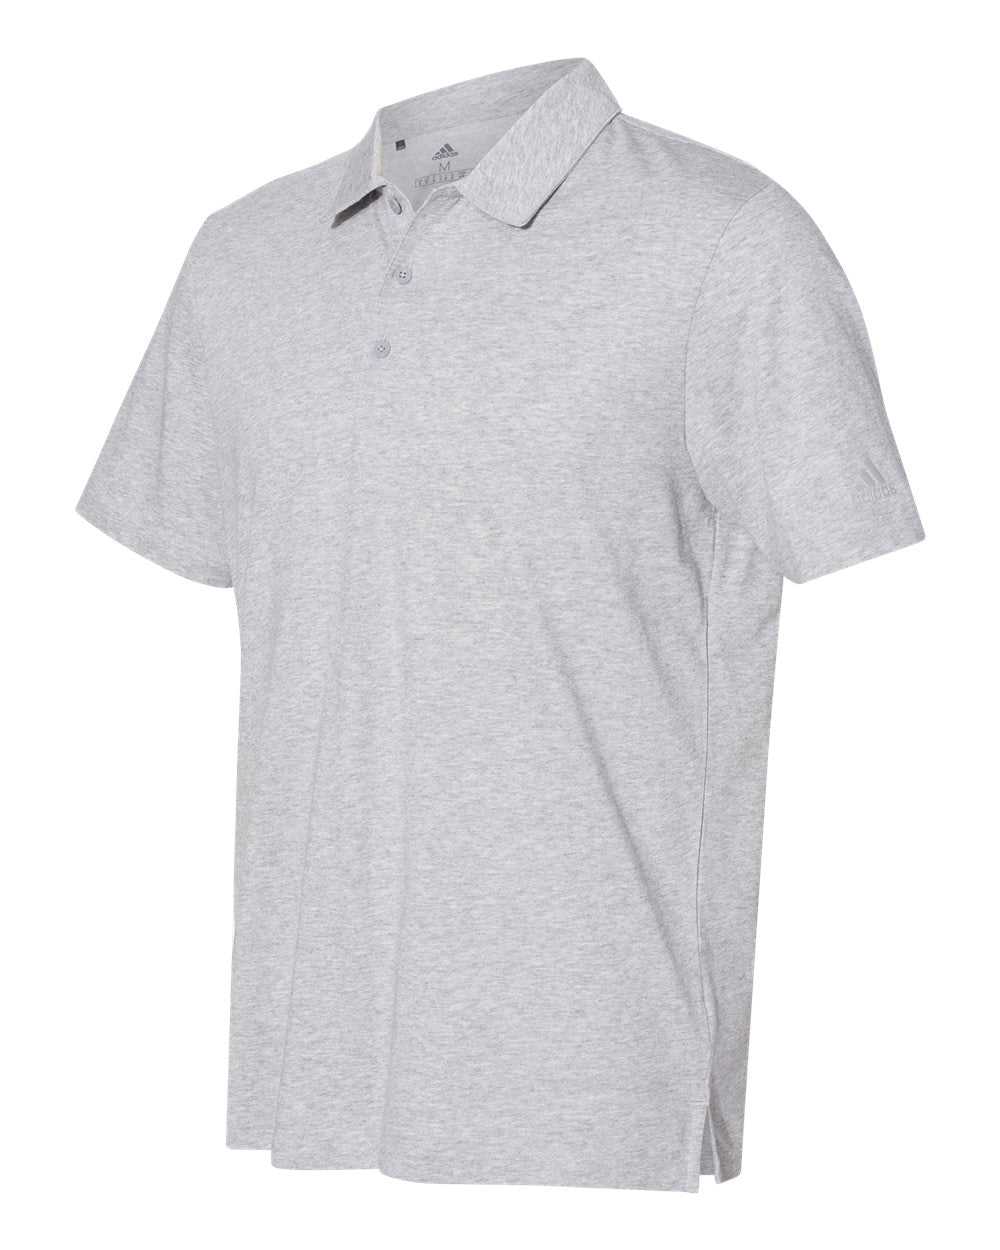 Adidas A322 Cotton Blend Sport Shirt - Medium Grey Heather - HIT a Double